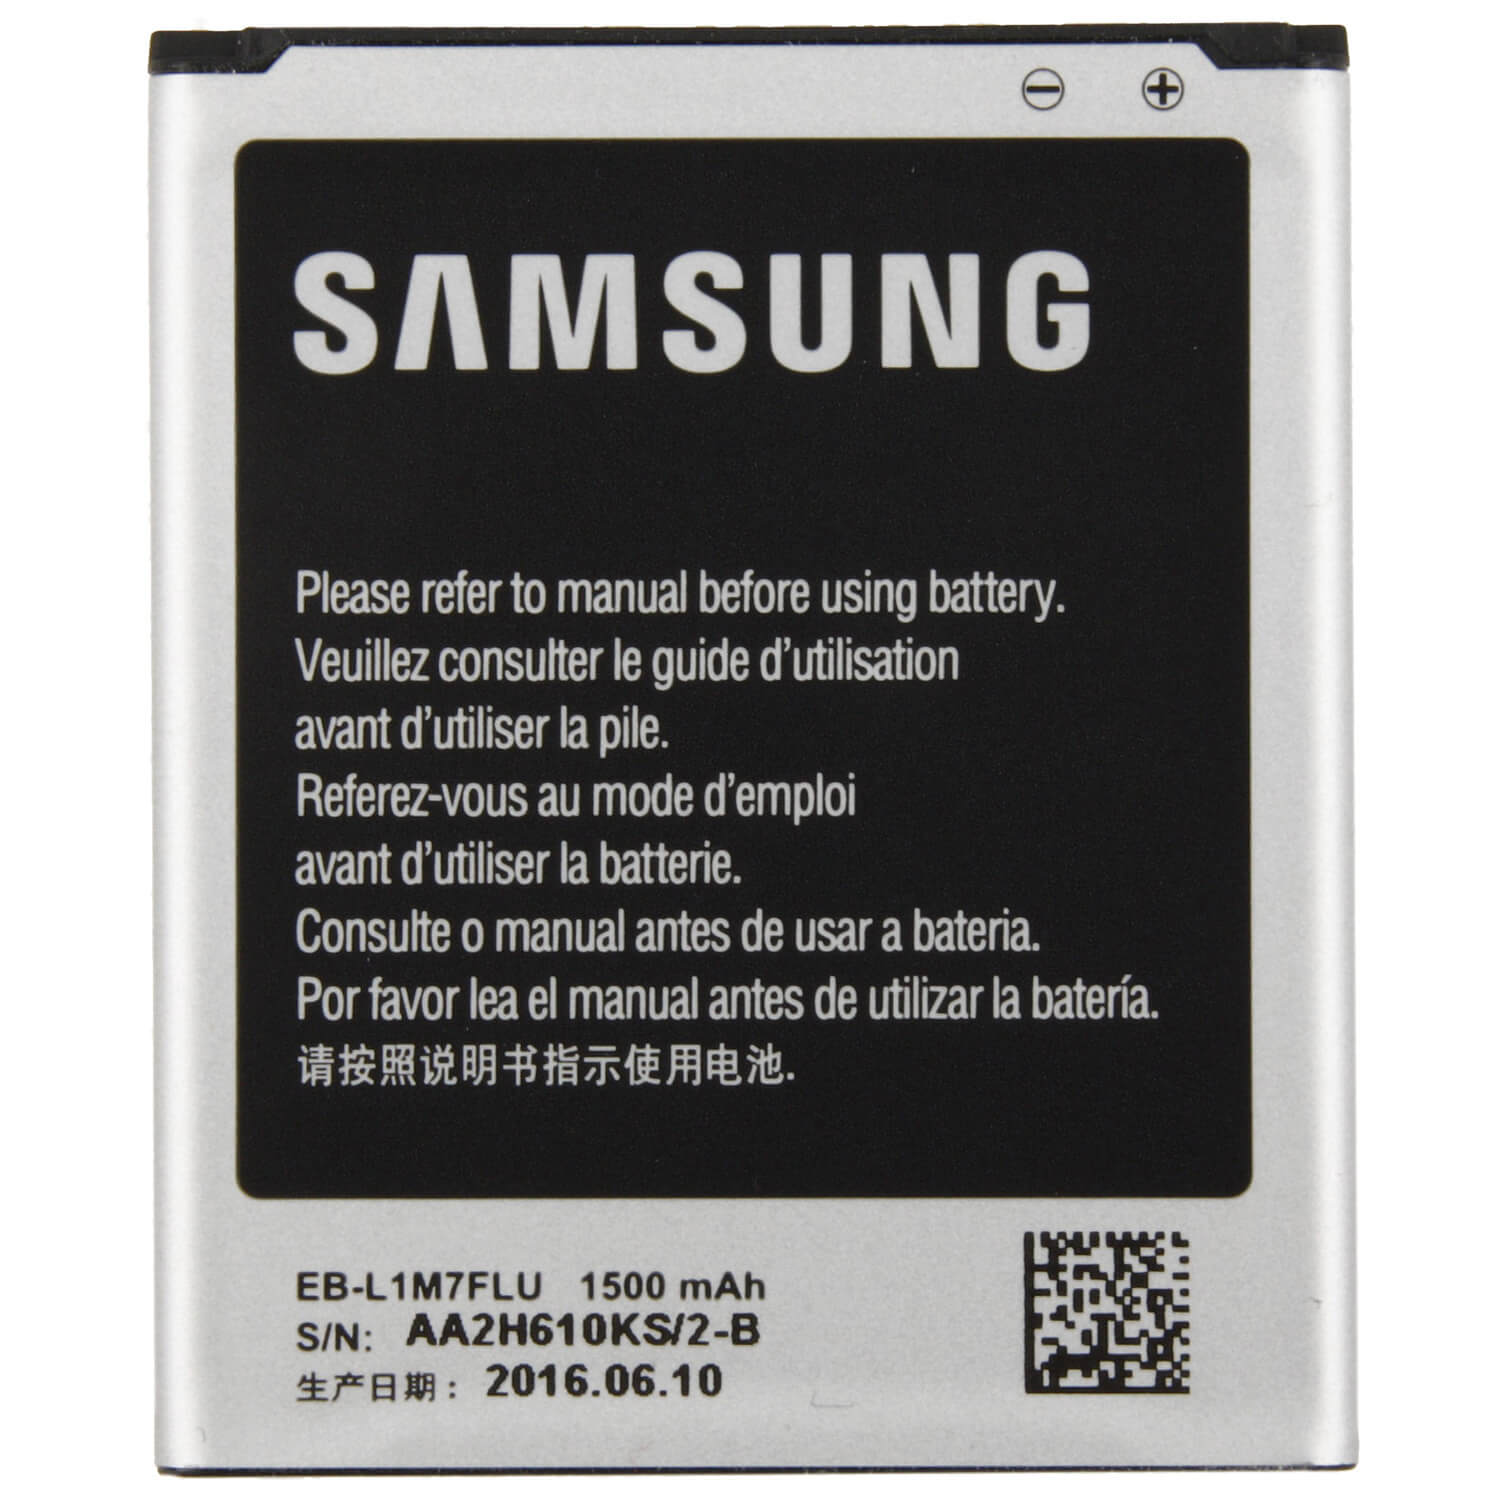 Аккумулятор для телефона j1. Samsung eb425365lu. Samsung Battery Duos. Аккумуляторная батарея для модели Samsung (b100ae) Galaxy Ace 4 Lite SM-g313h/s7262. Аккумулятор для самсунг дуос галакси.